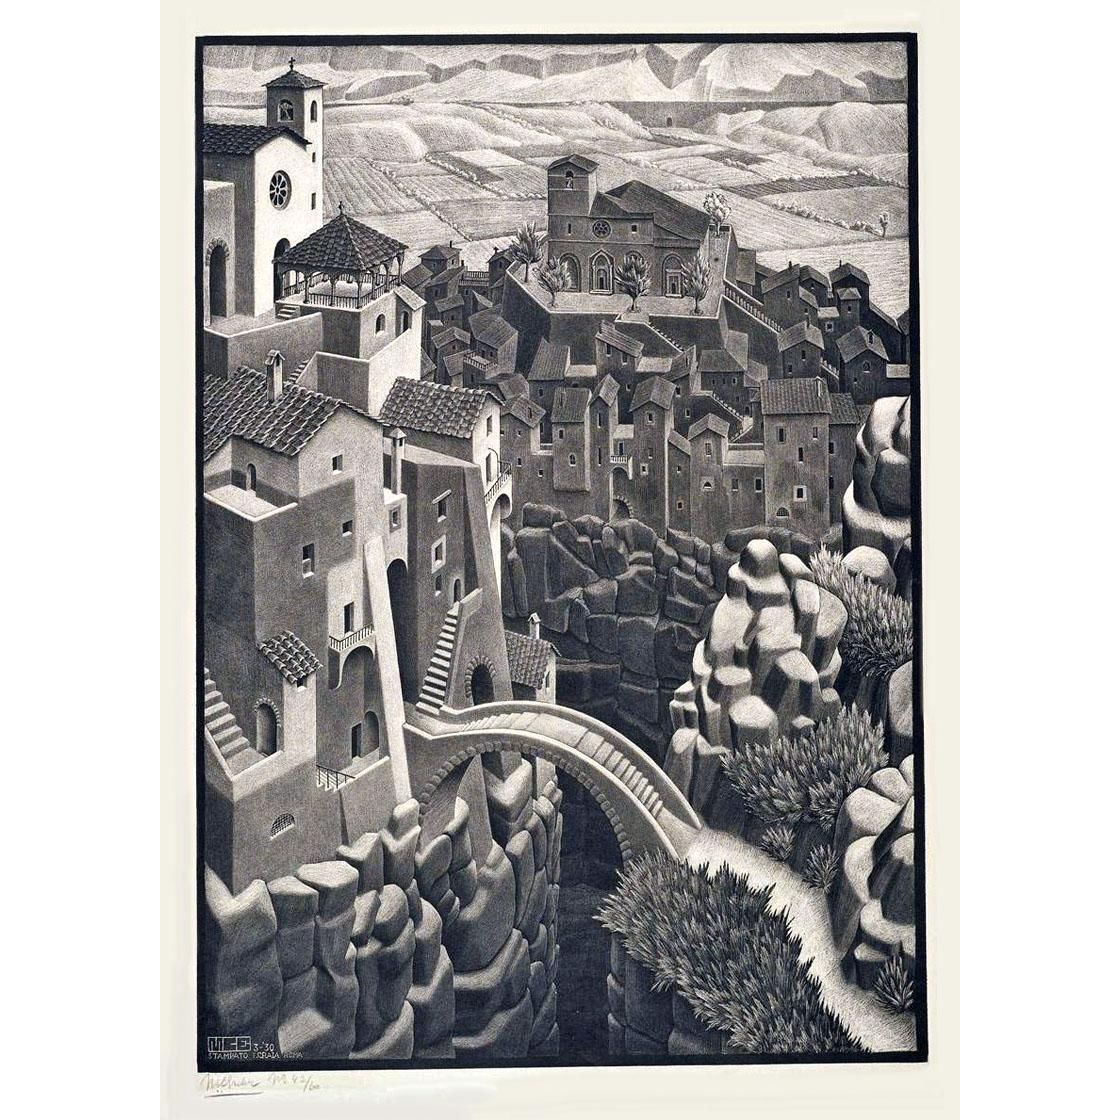 Maurits Cornelis Escher. The Bridge. 1930